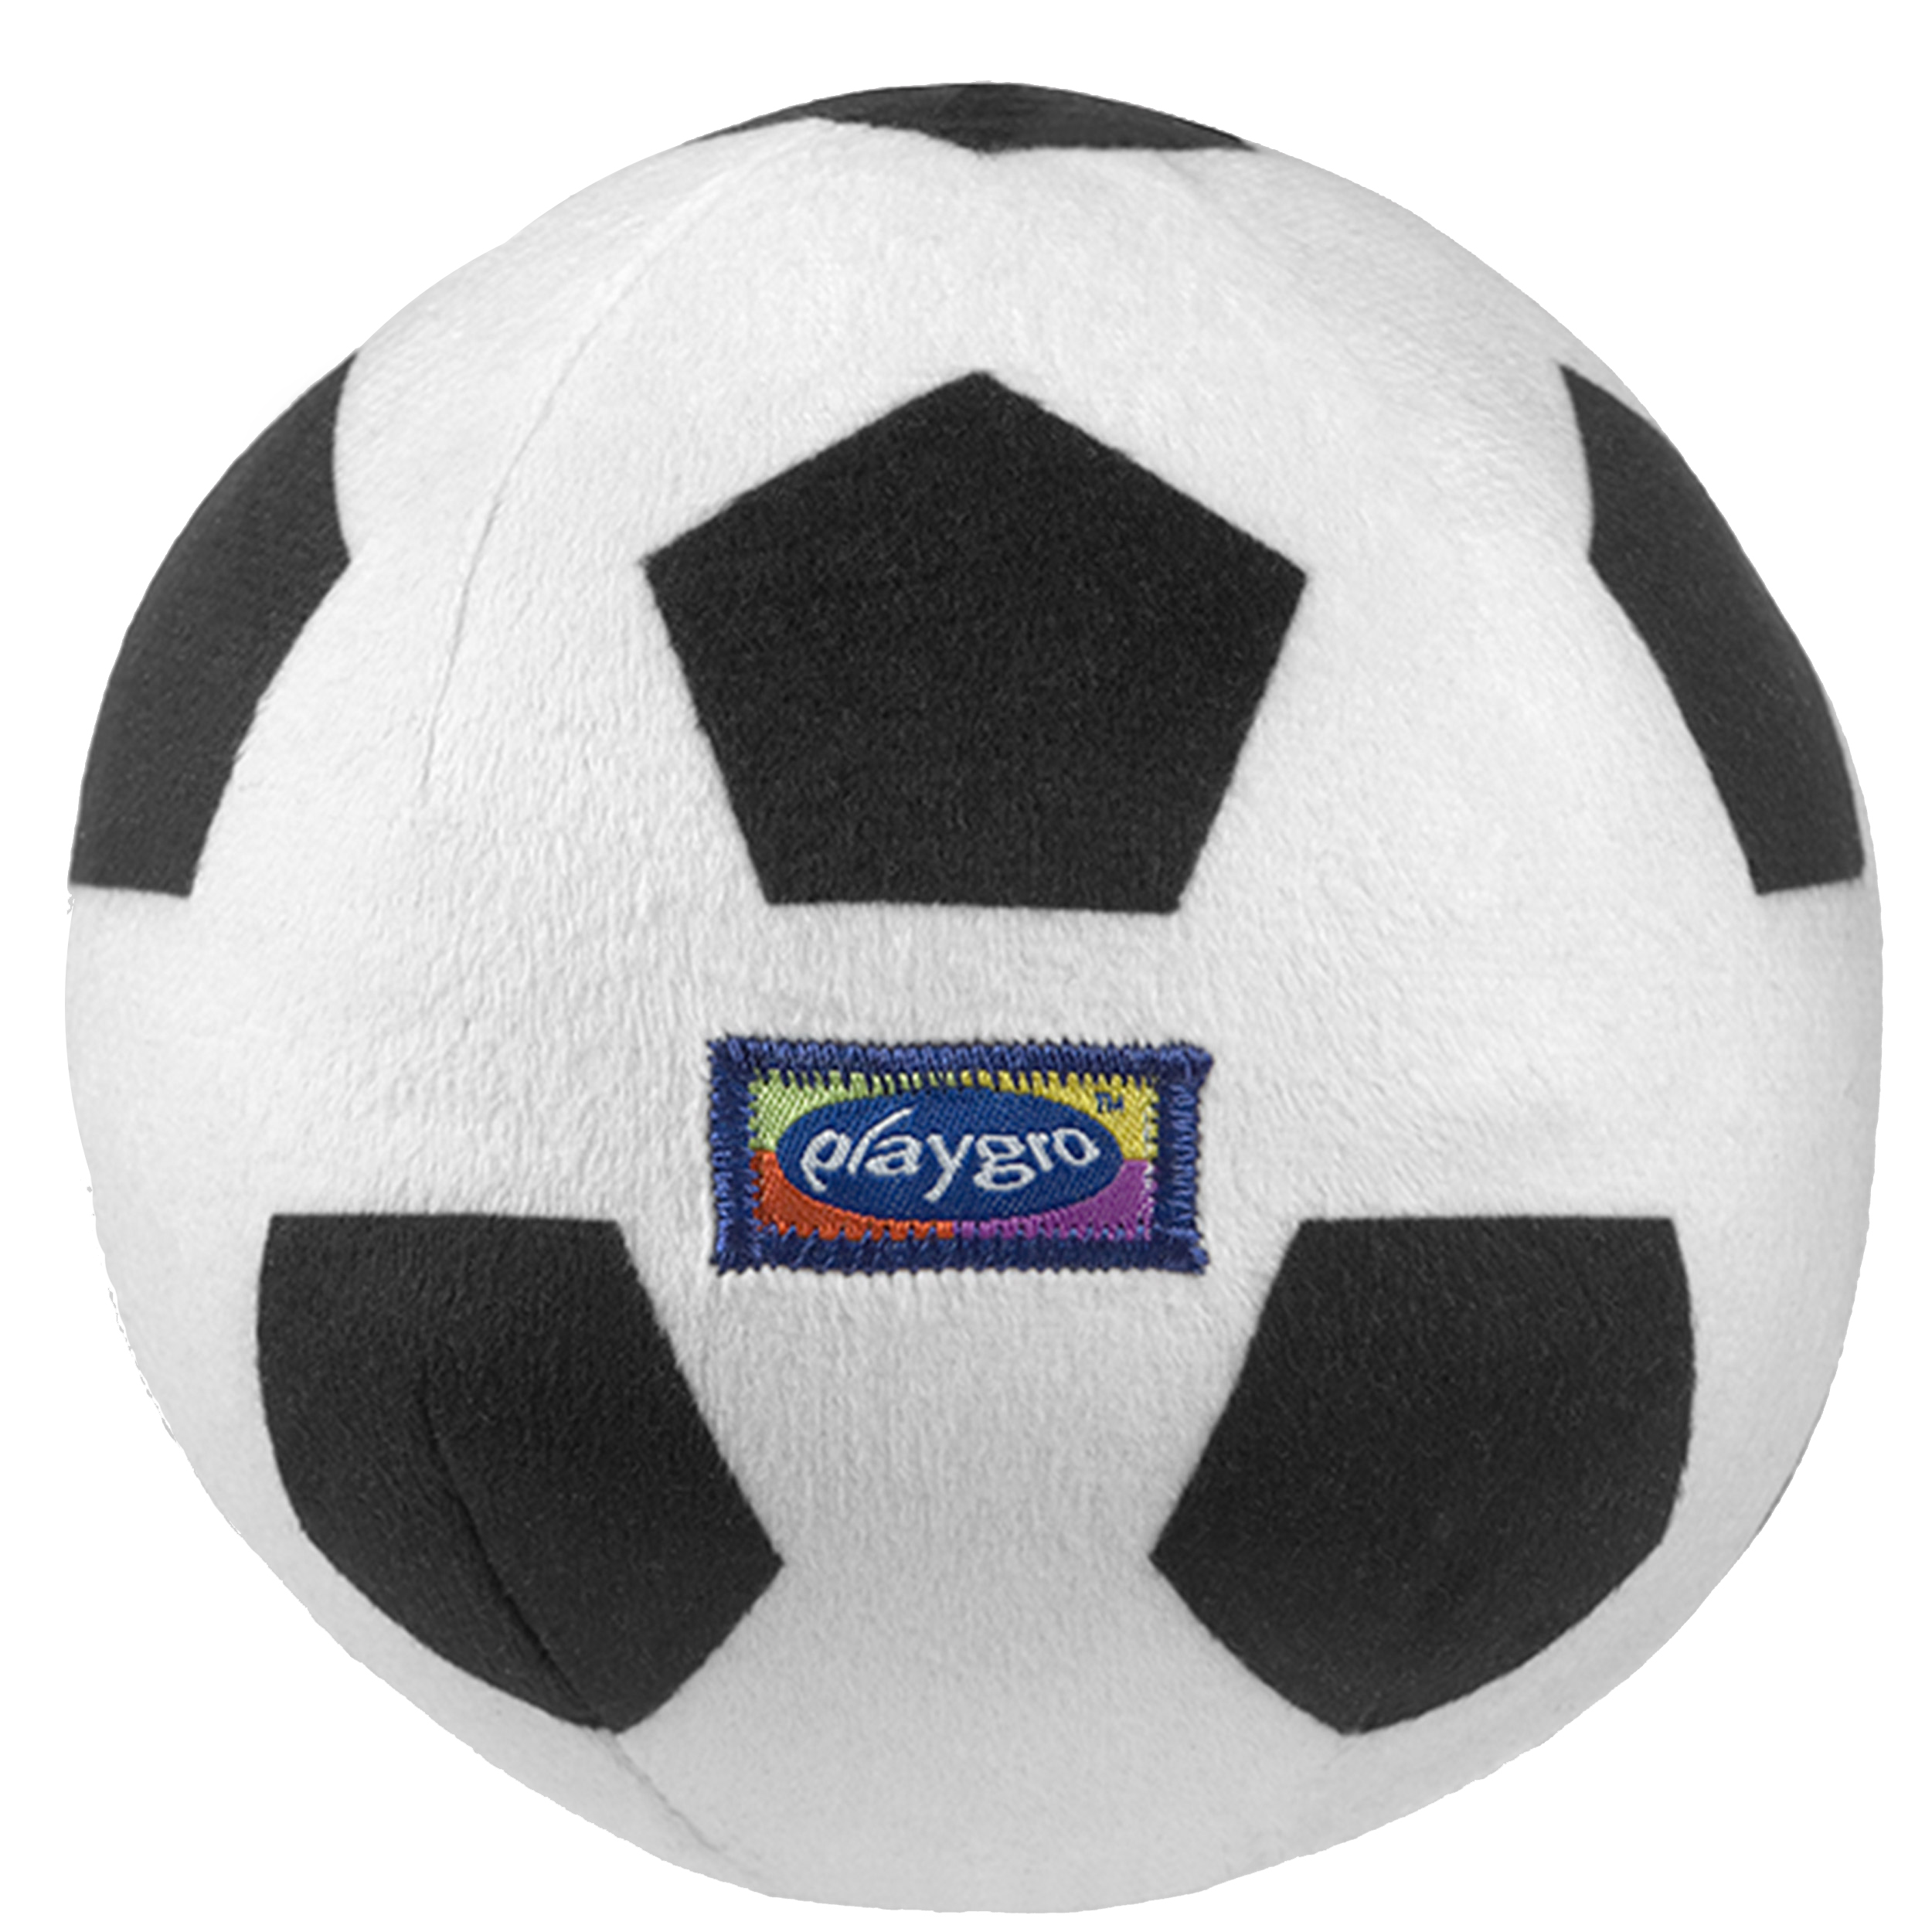 Mon premier ballon de Football blanc et noir de Playgro, Playgro : Aubert